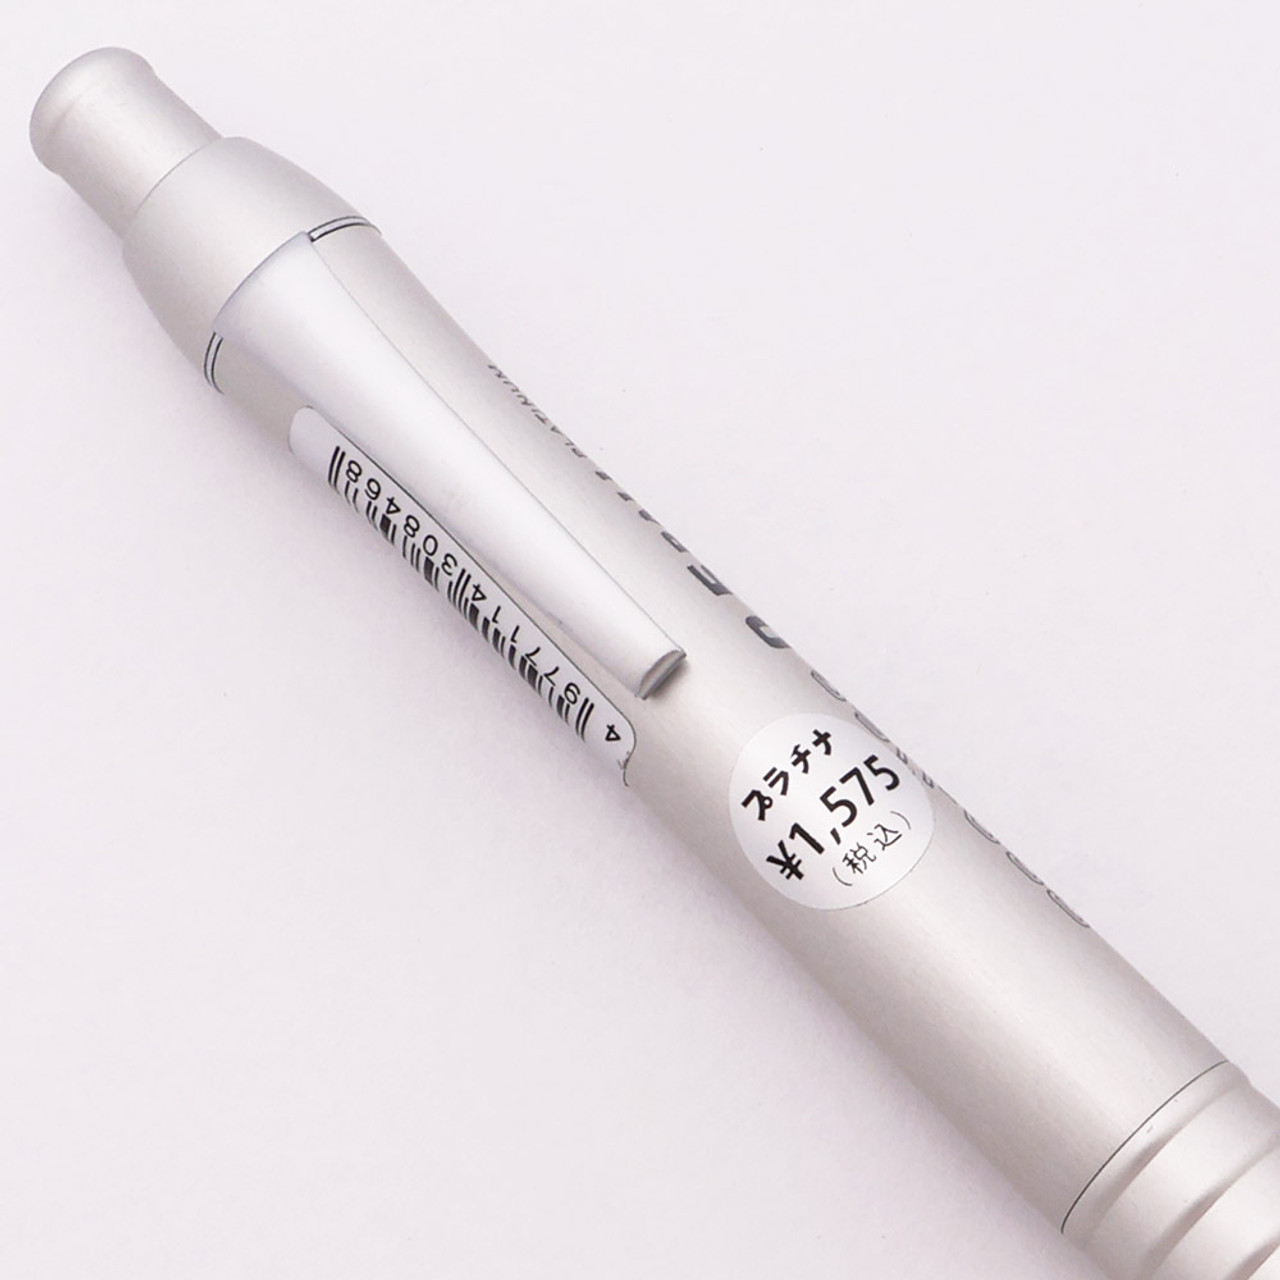 Platinum Pro-Use 1500 Ballpoint Pen - Brushed Aluminum, 0.5 mm Point (Near Mint, Works Well)